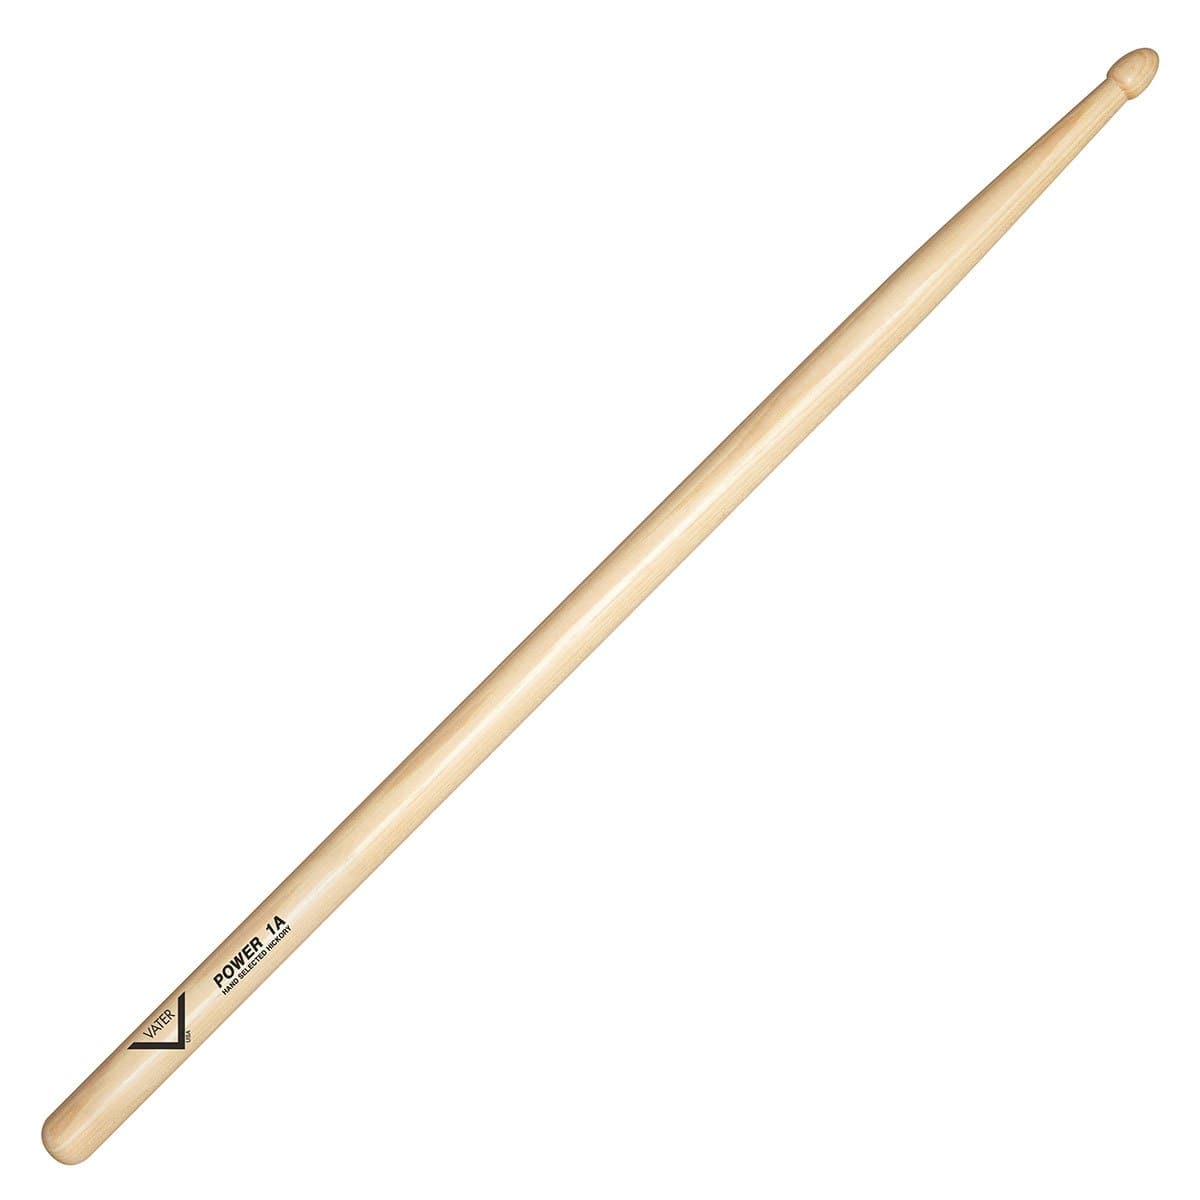 Vater Power 1A Wood Tip Drum Sticks